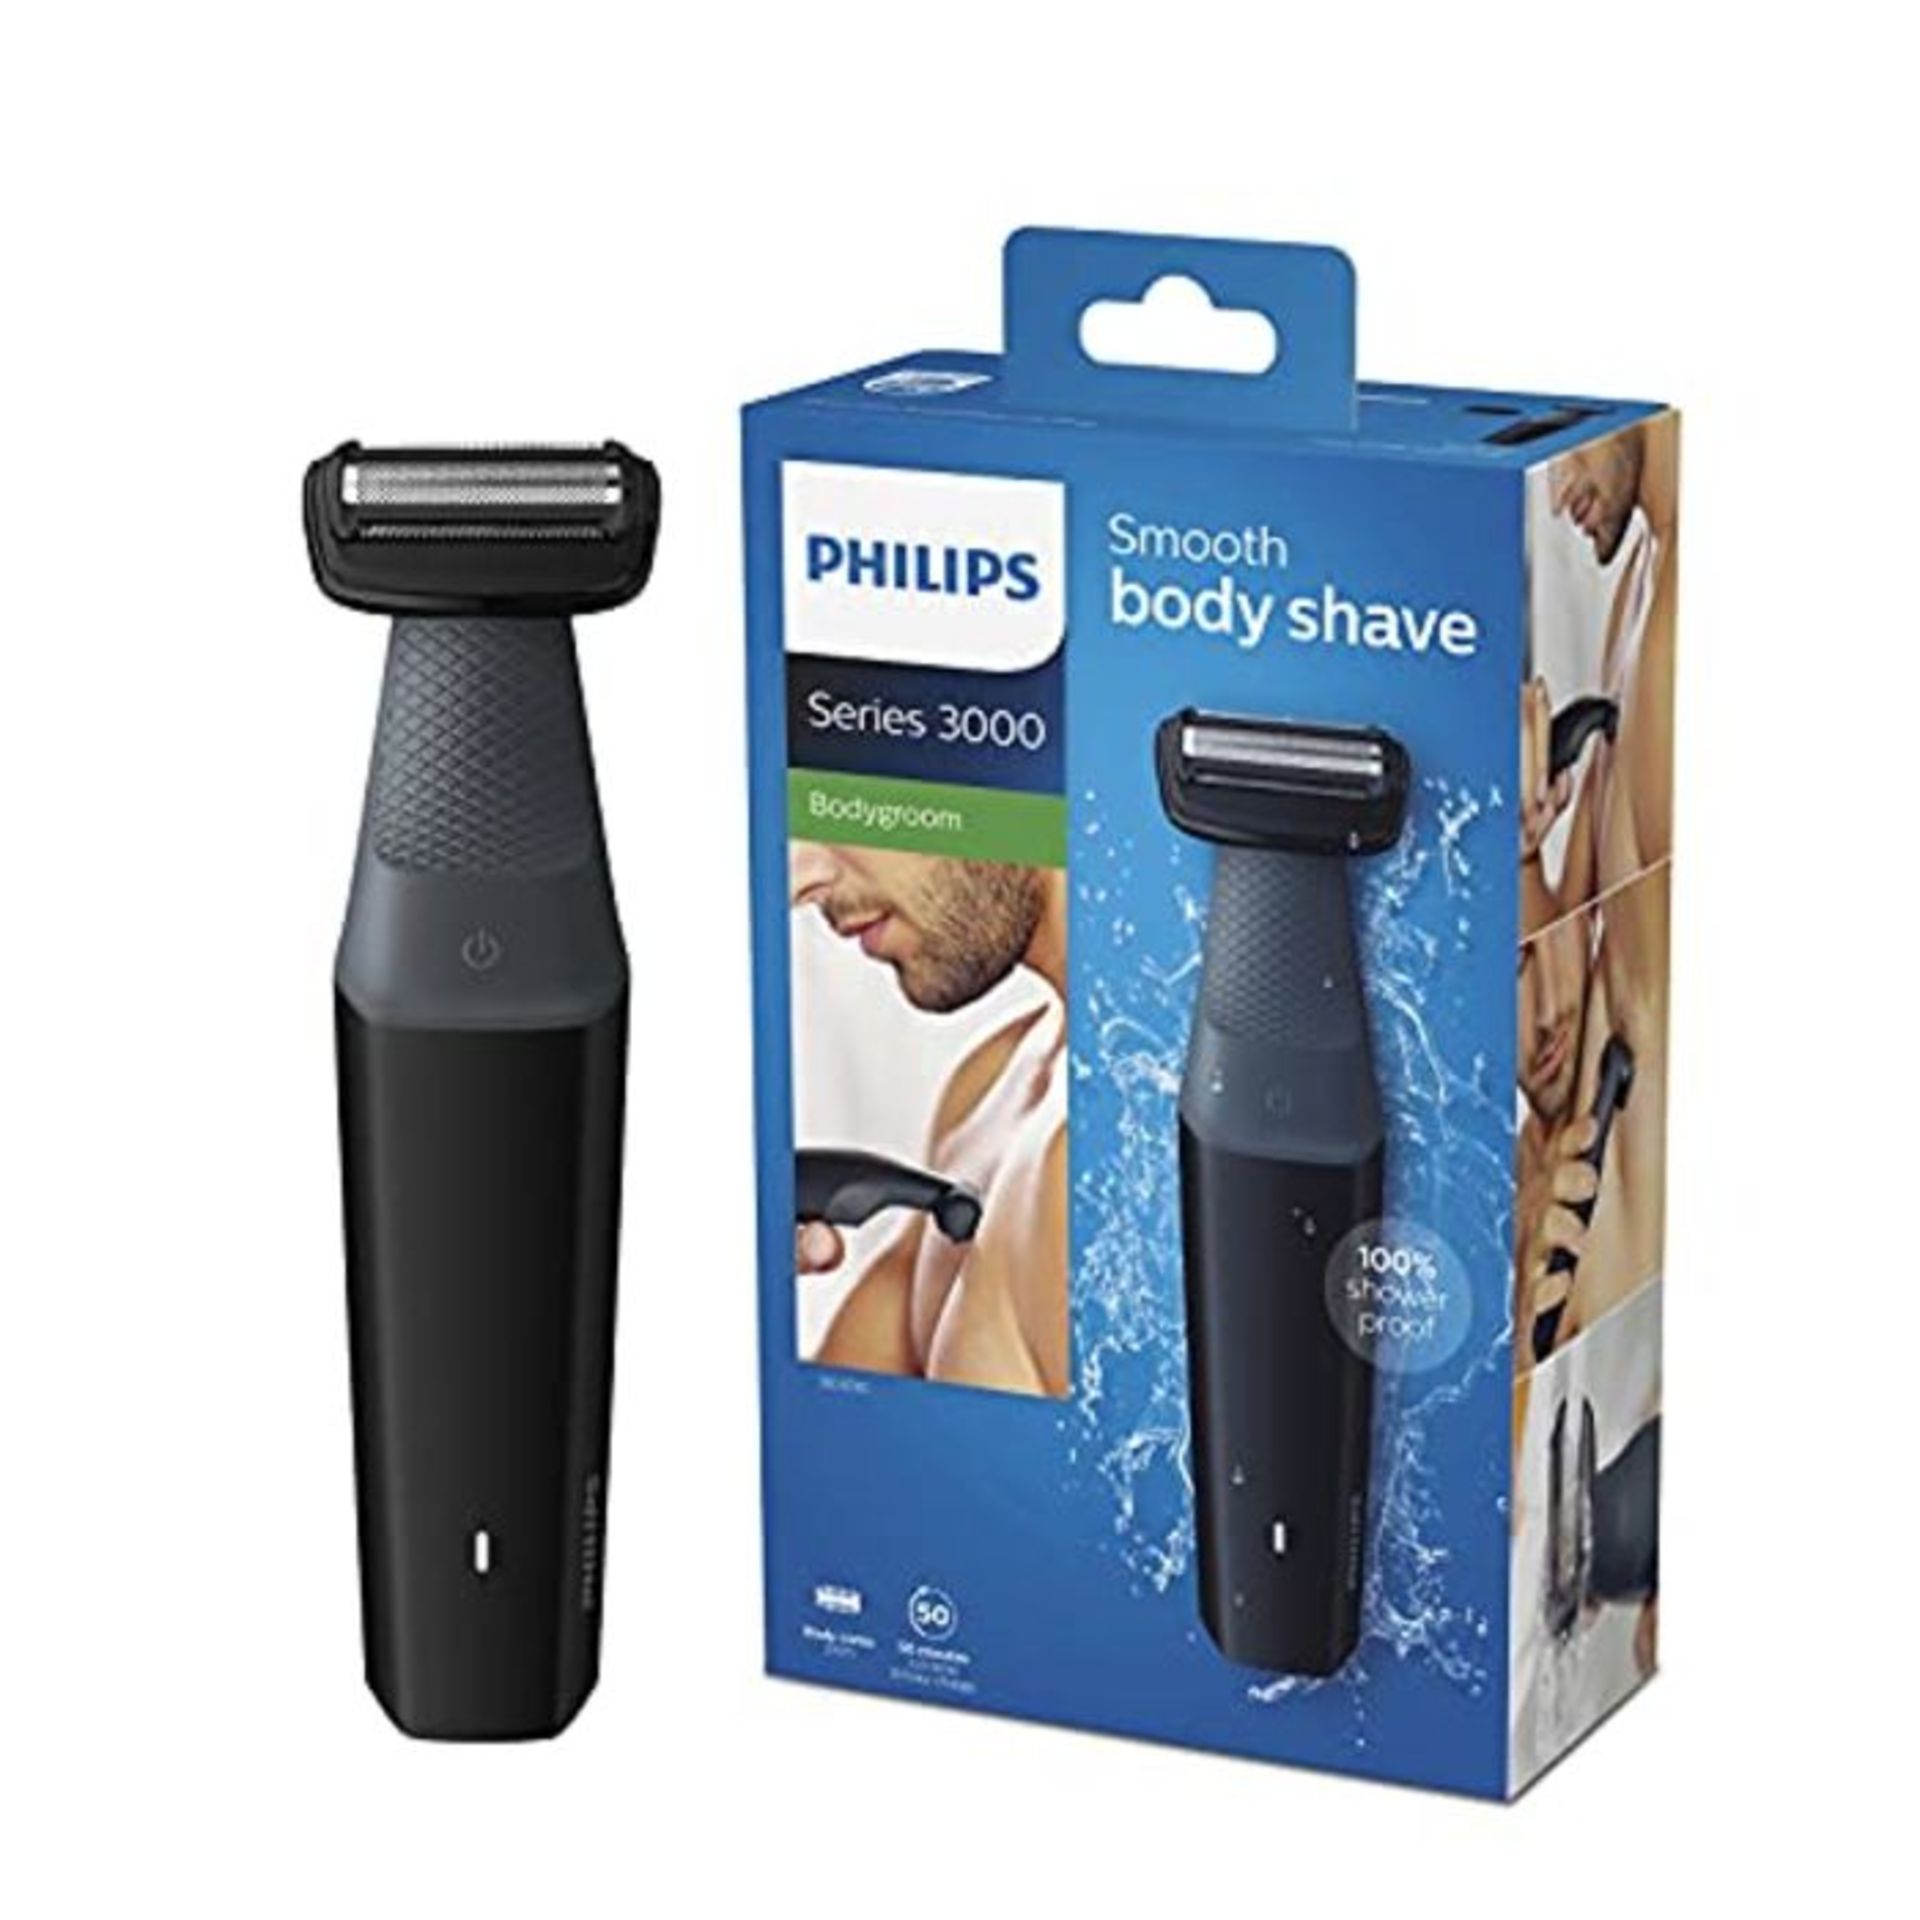 Philips Series 3000 Showerproof Body Groomer with Skin Comfort System - BG3010/13